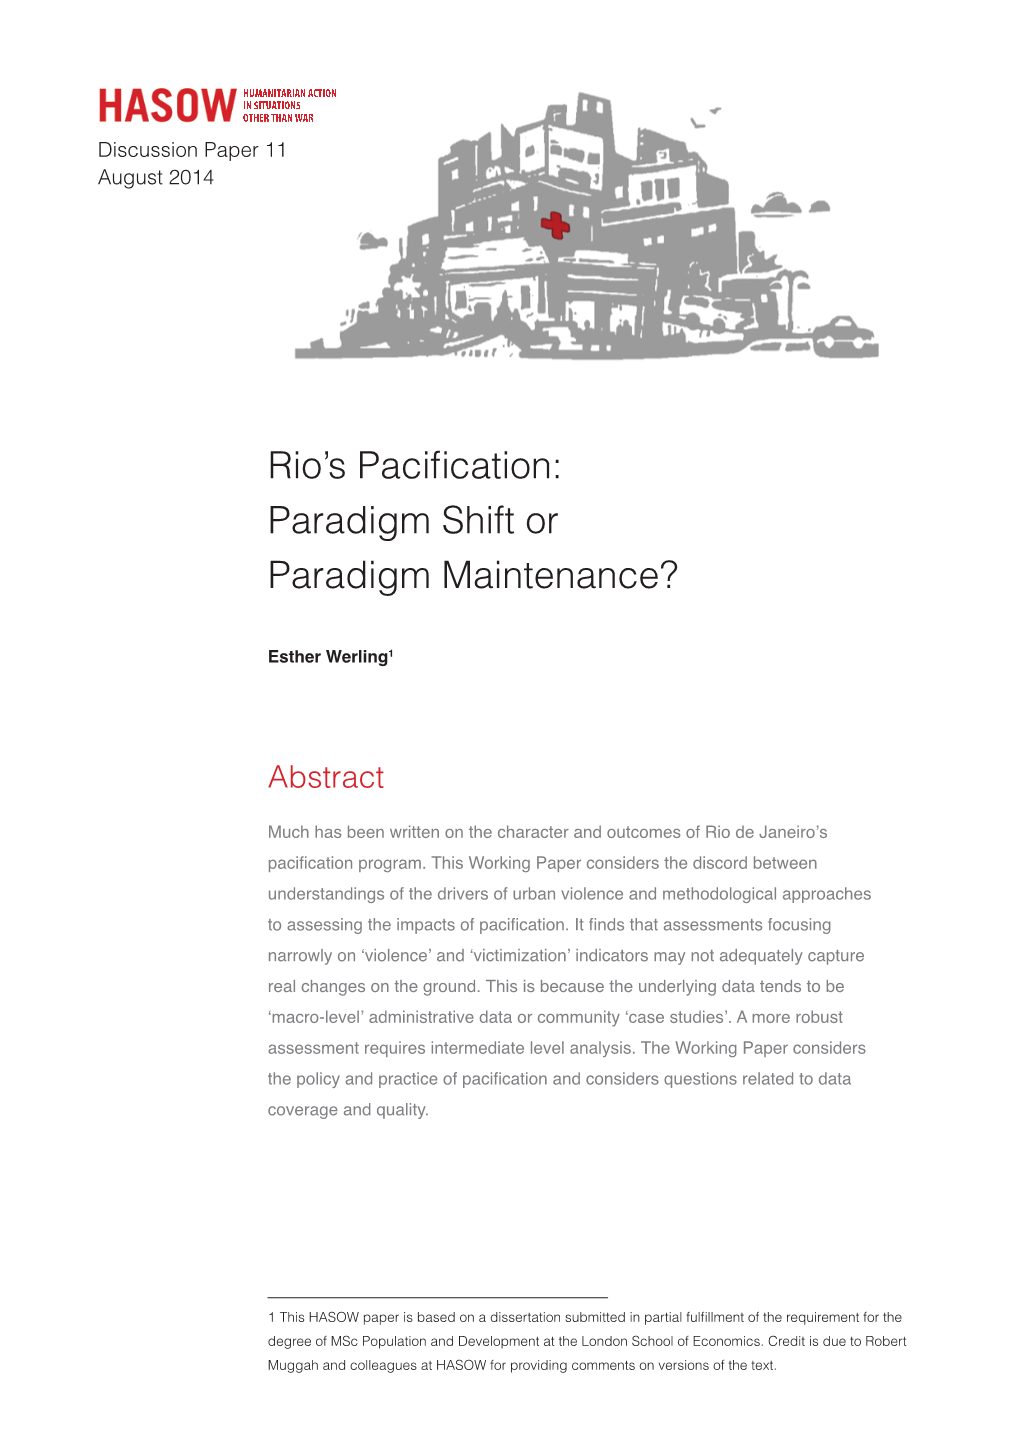 Rio's Pacification: Paradigm Shift Or Paradigm Maintenance?